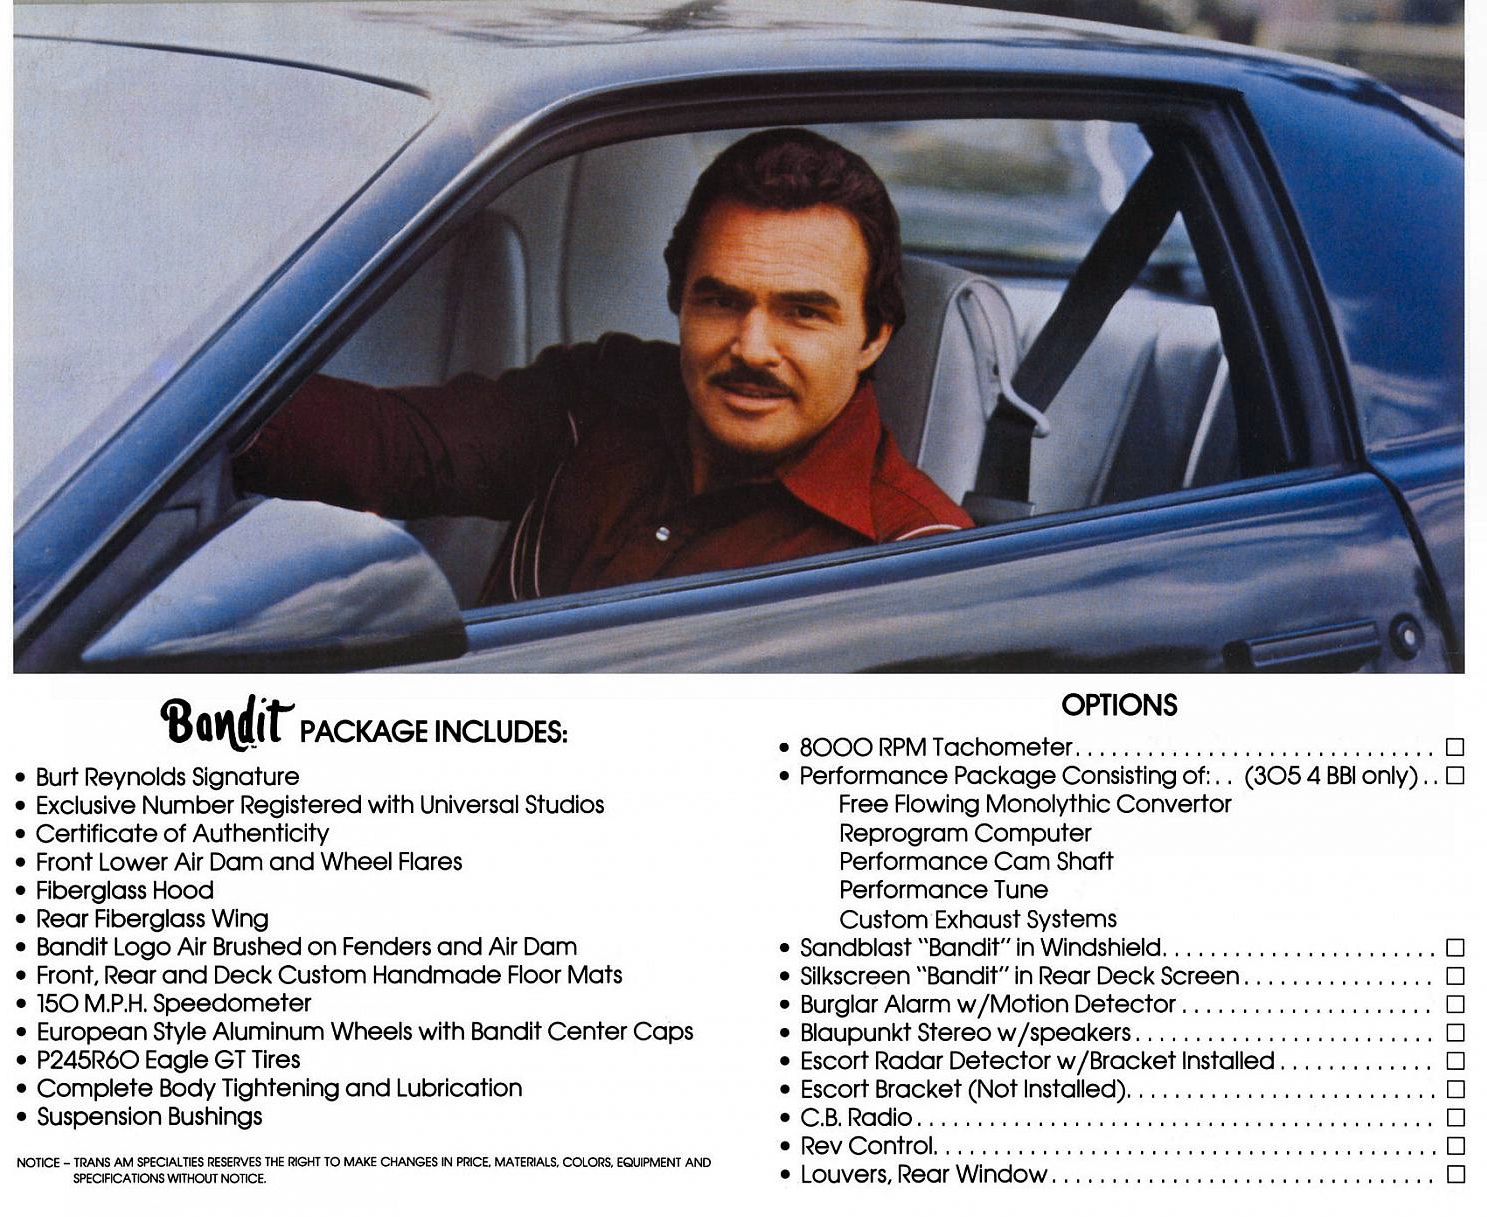 1982 Pontiac Firebird Trans-Am Bandit Brochure Page 1